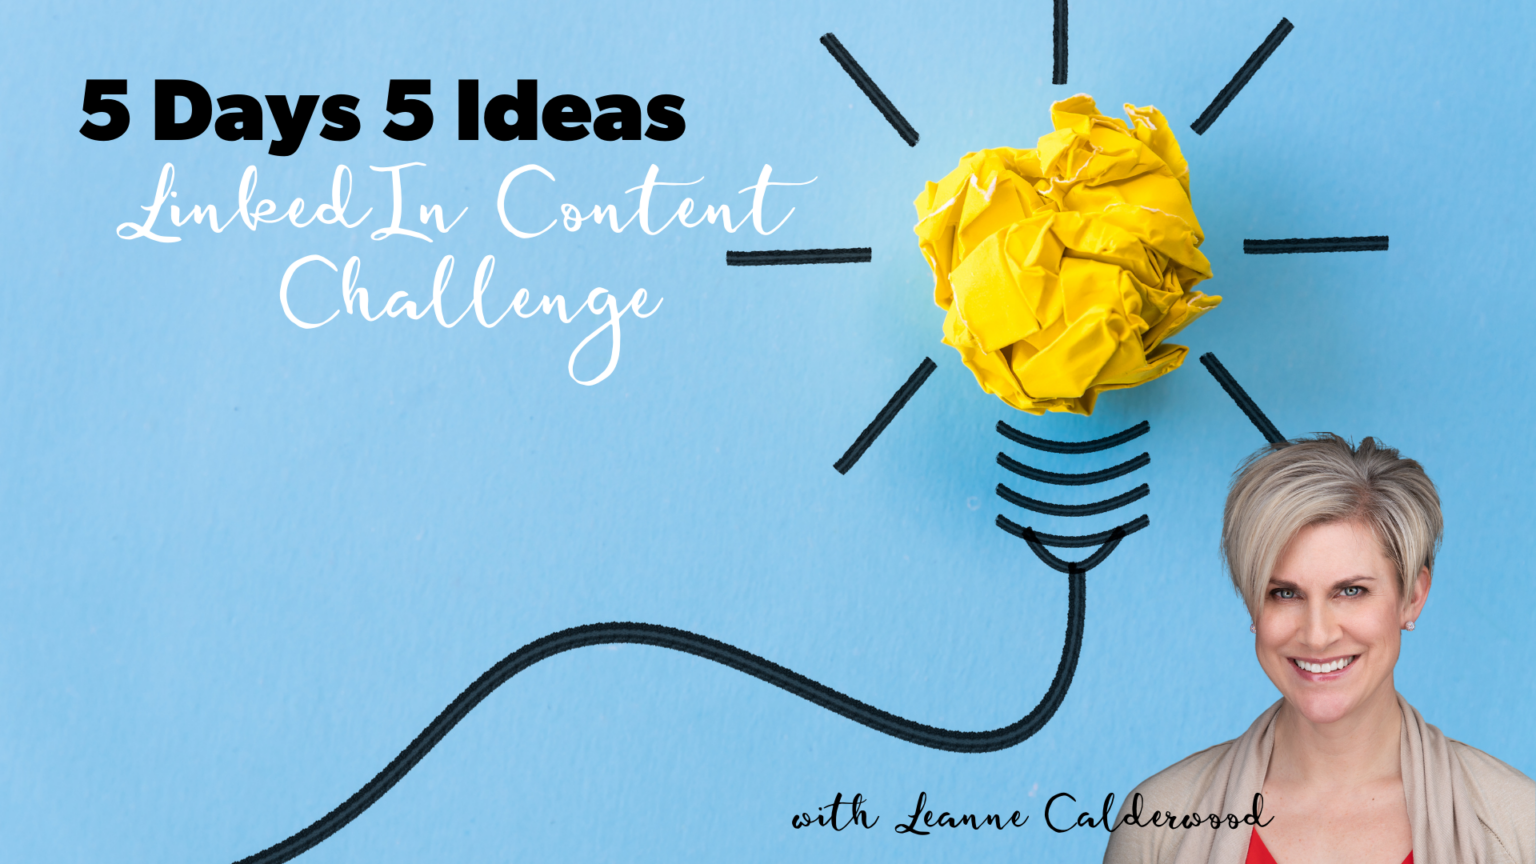 5 Days 5 Ideas linkedin content challenge - Leanne Calderwood